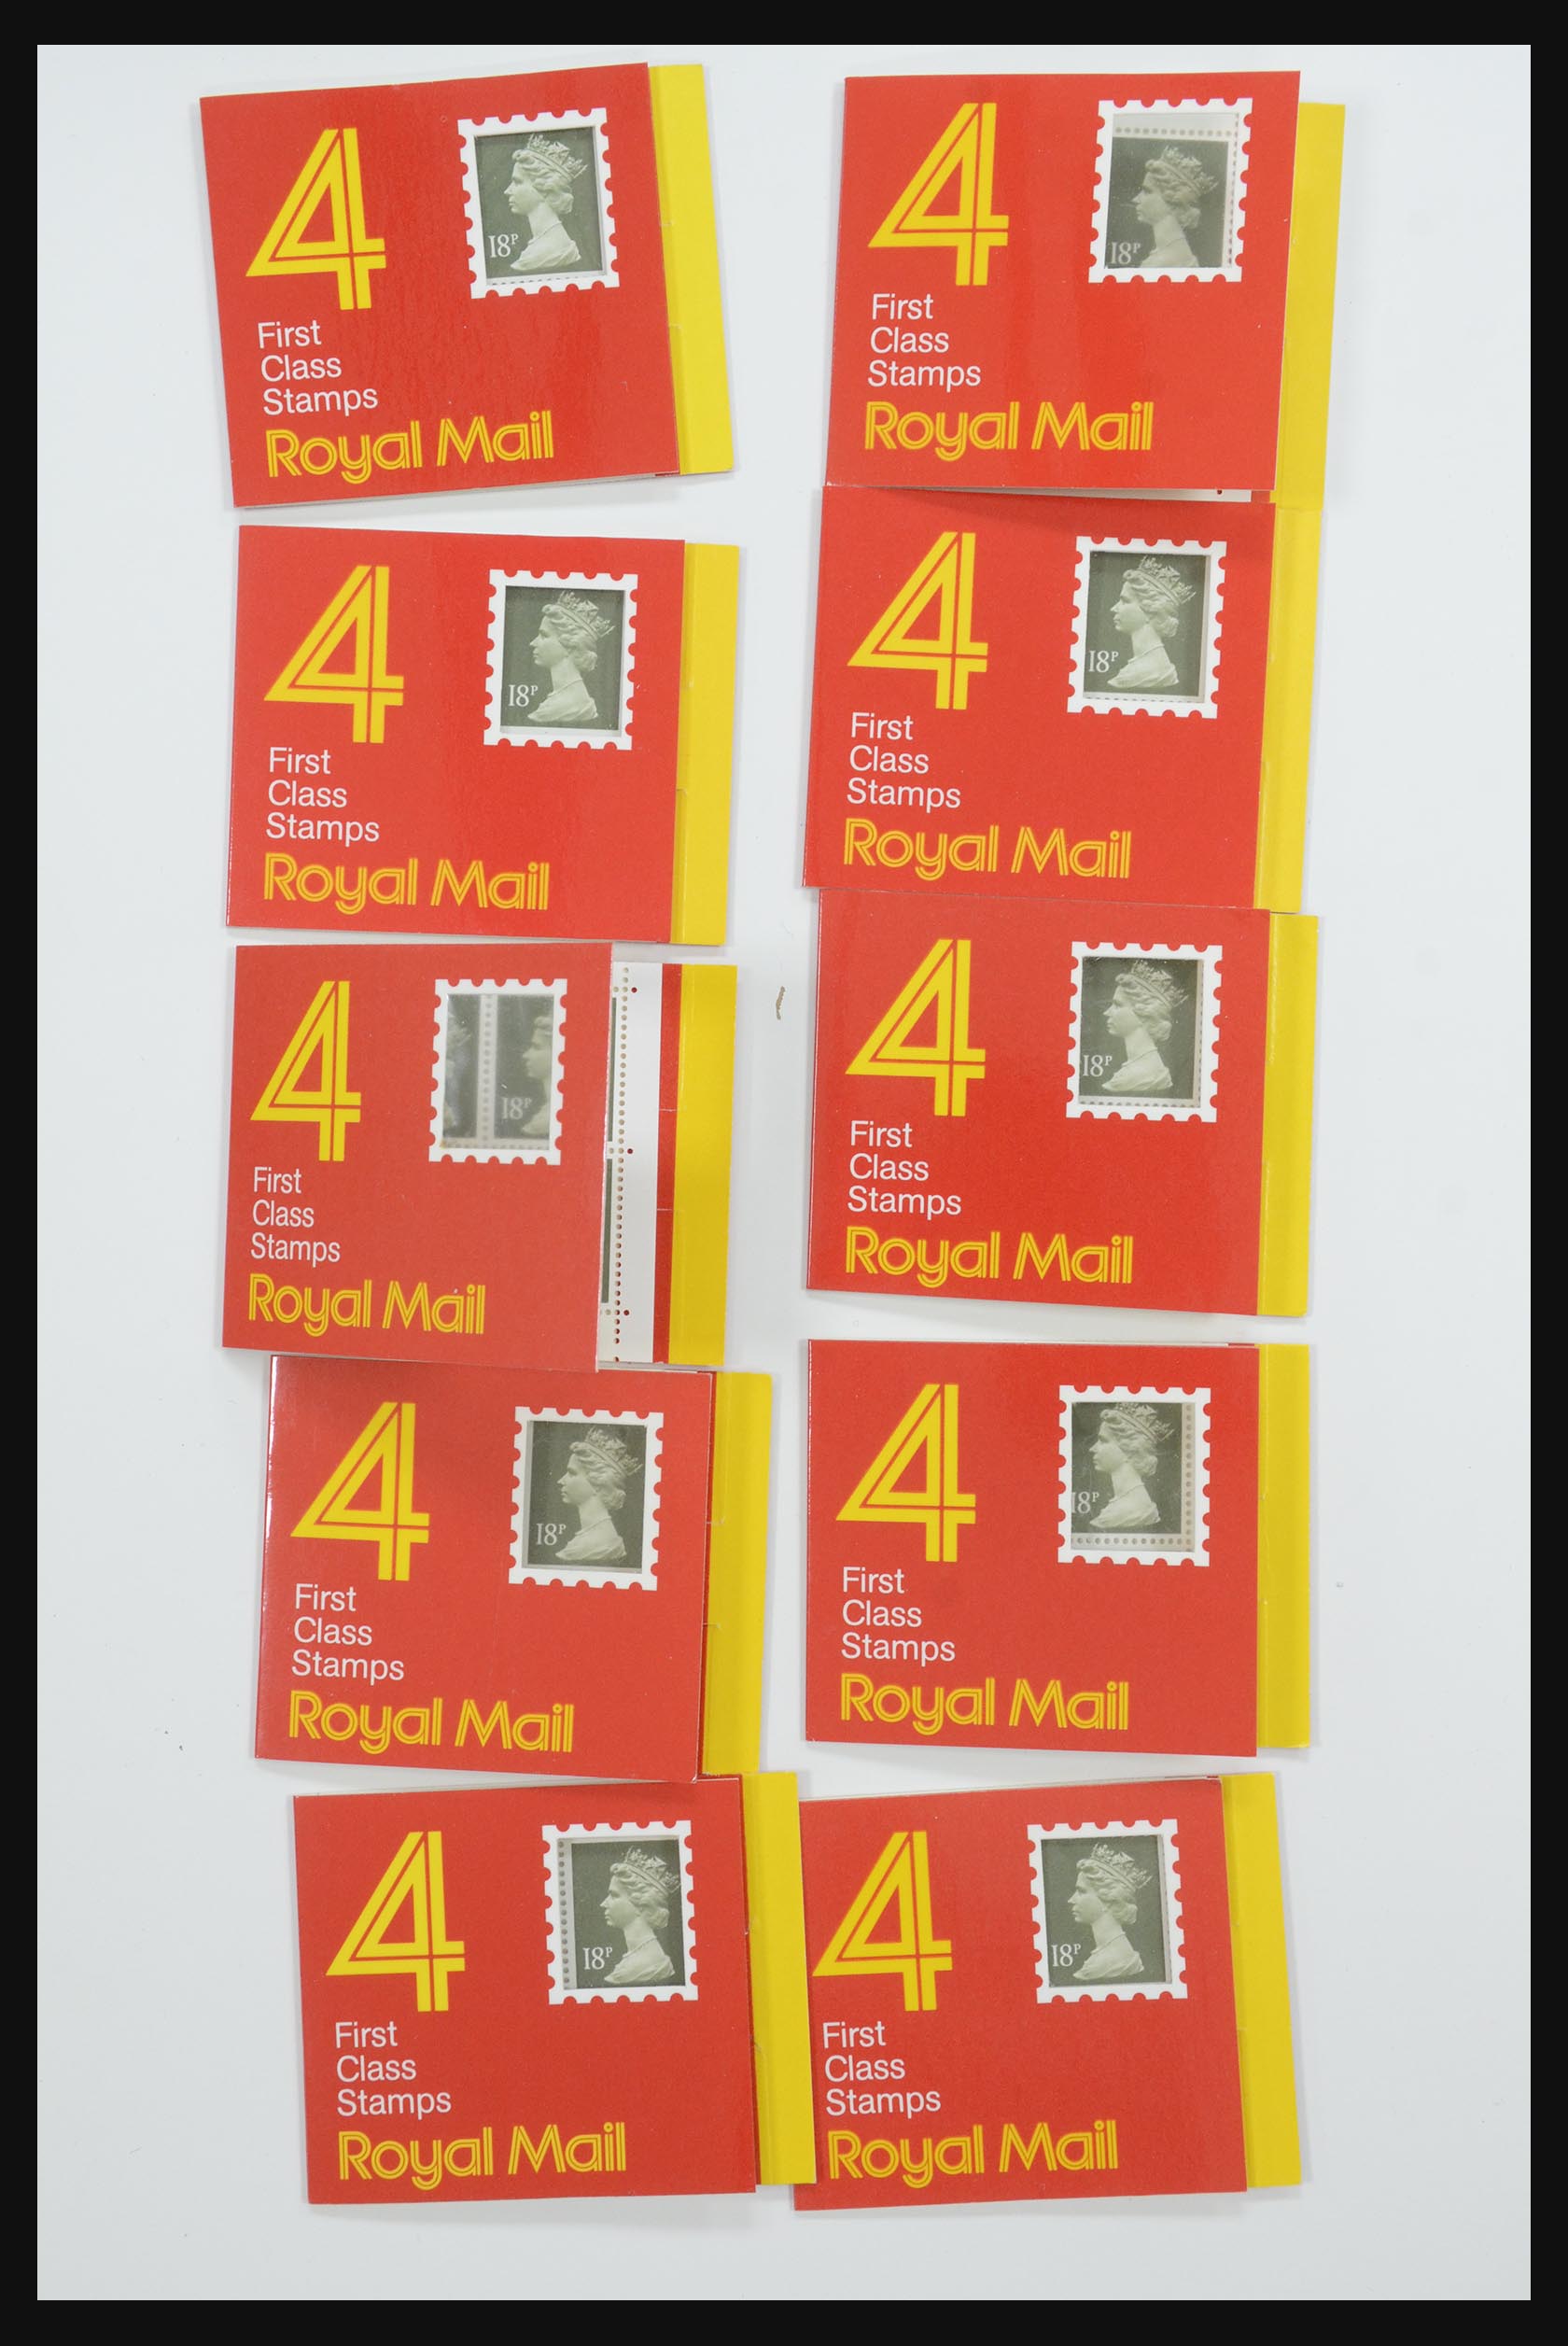 31961 052 - 31961 Great Britain stampbooklets 1971-1999.